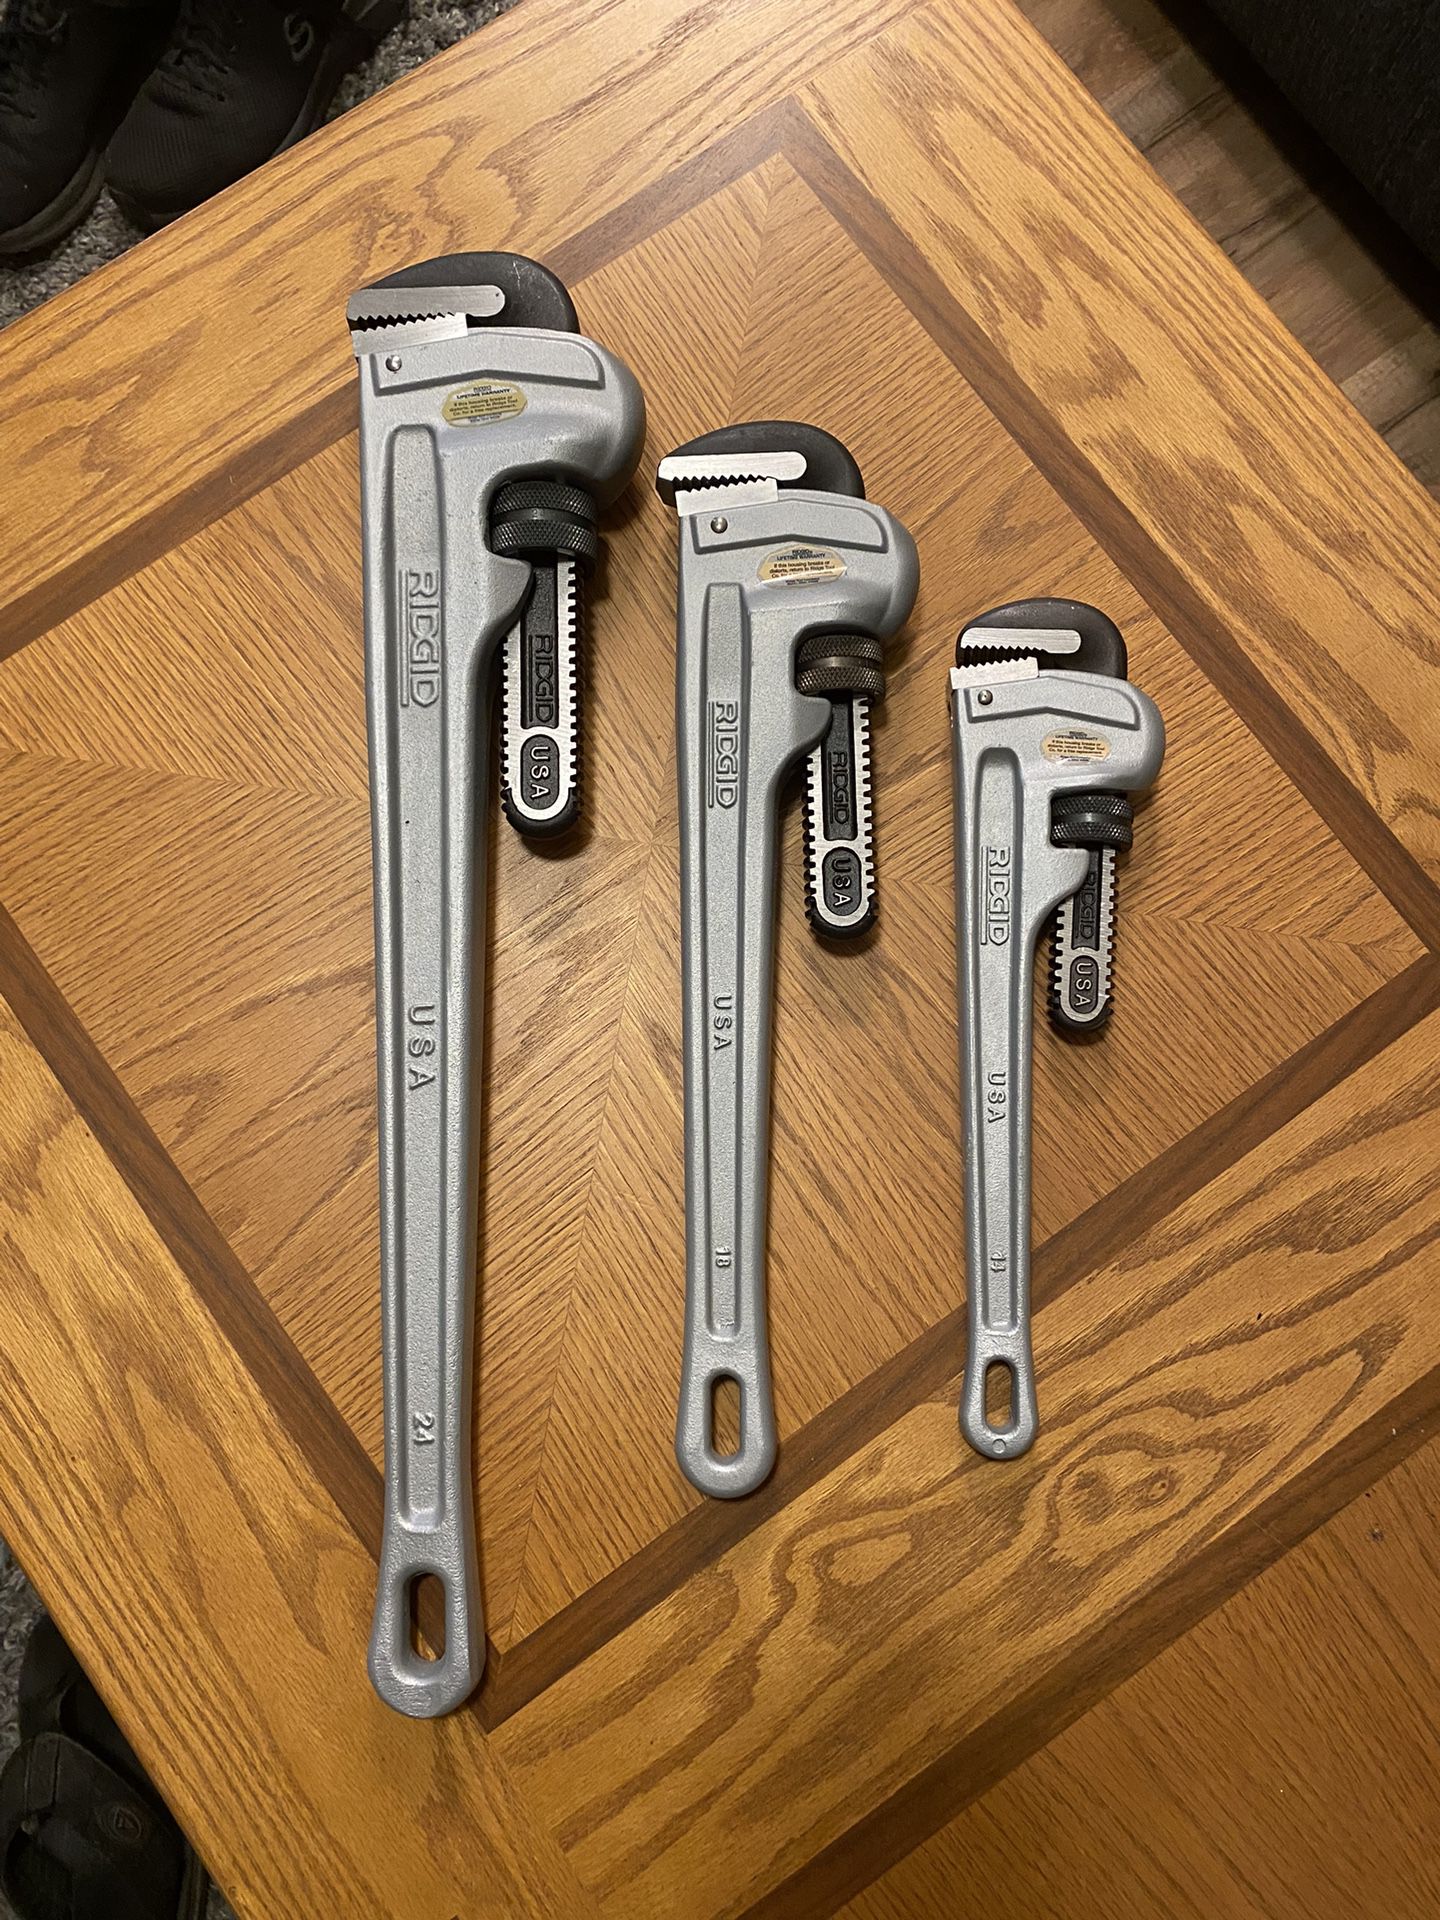 Ridgid Aluminum Pipe Wrench Set